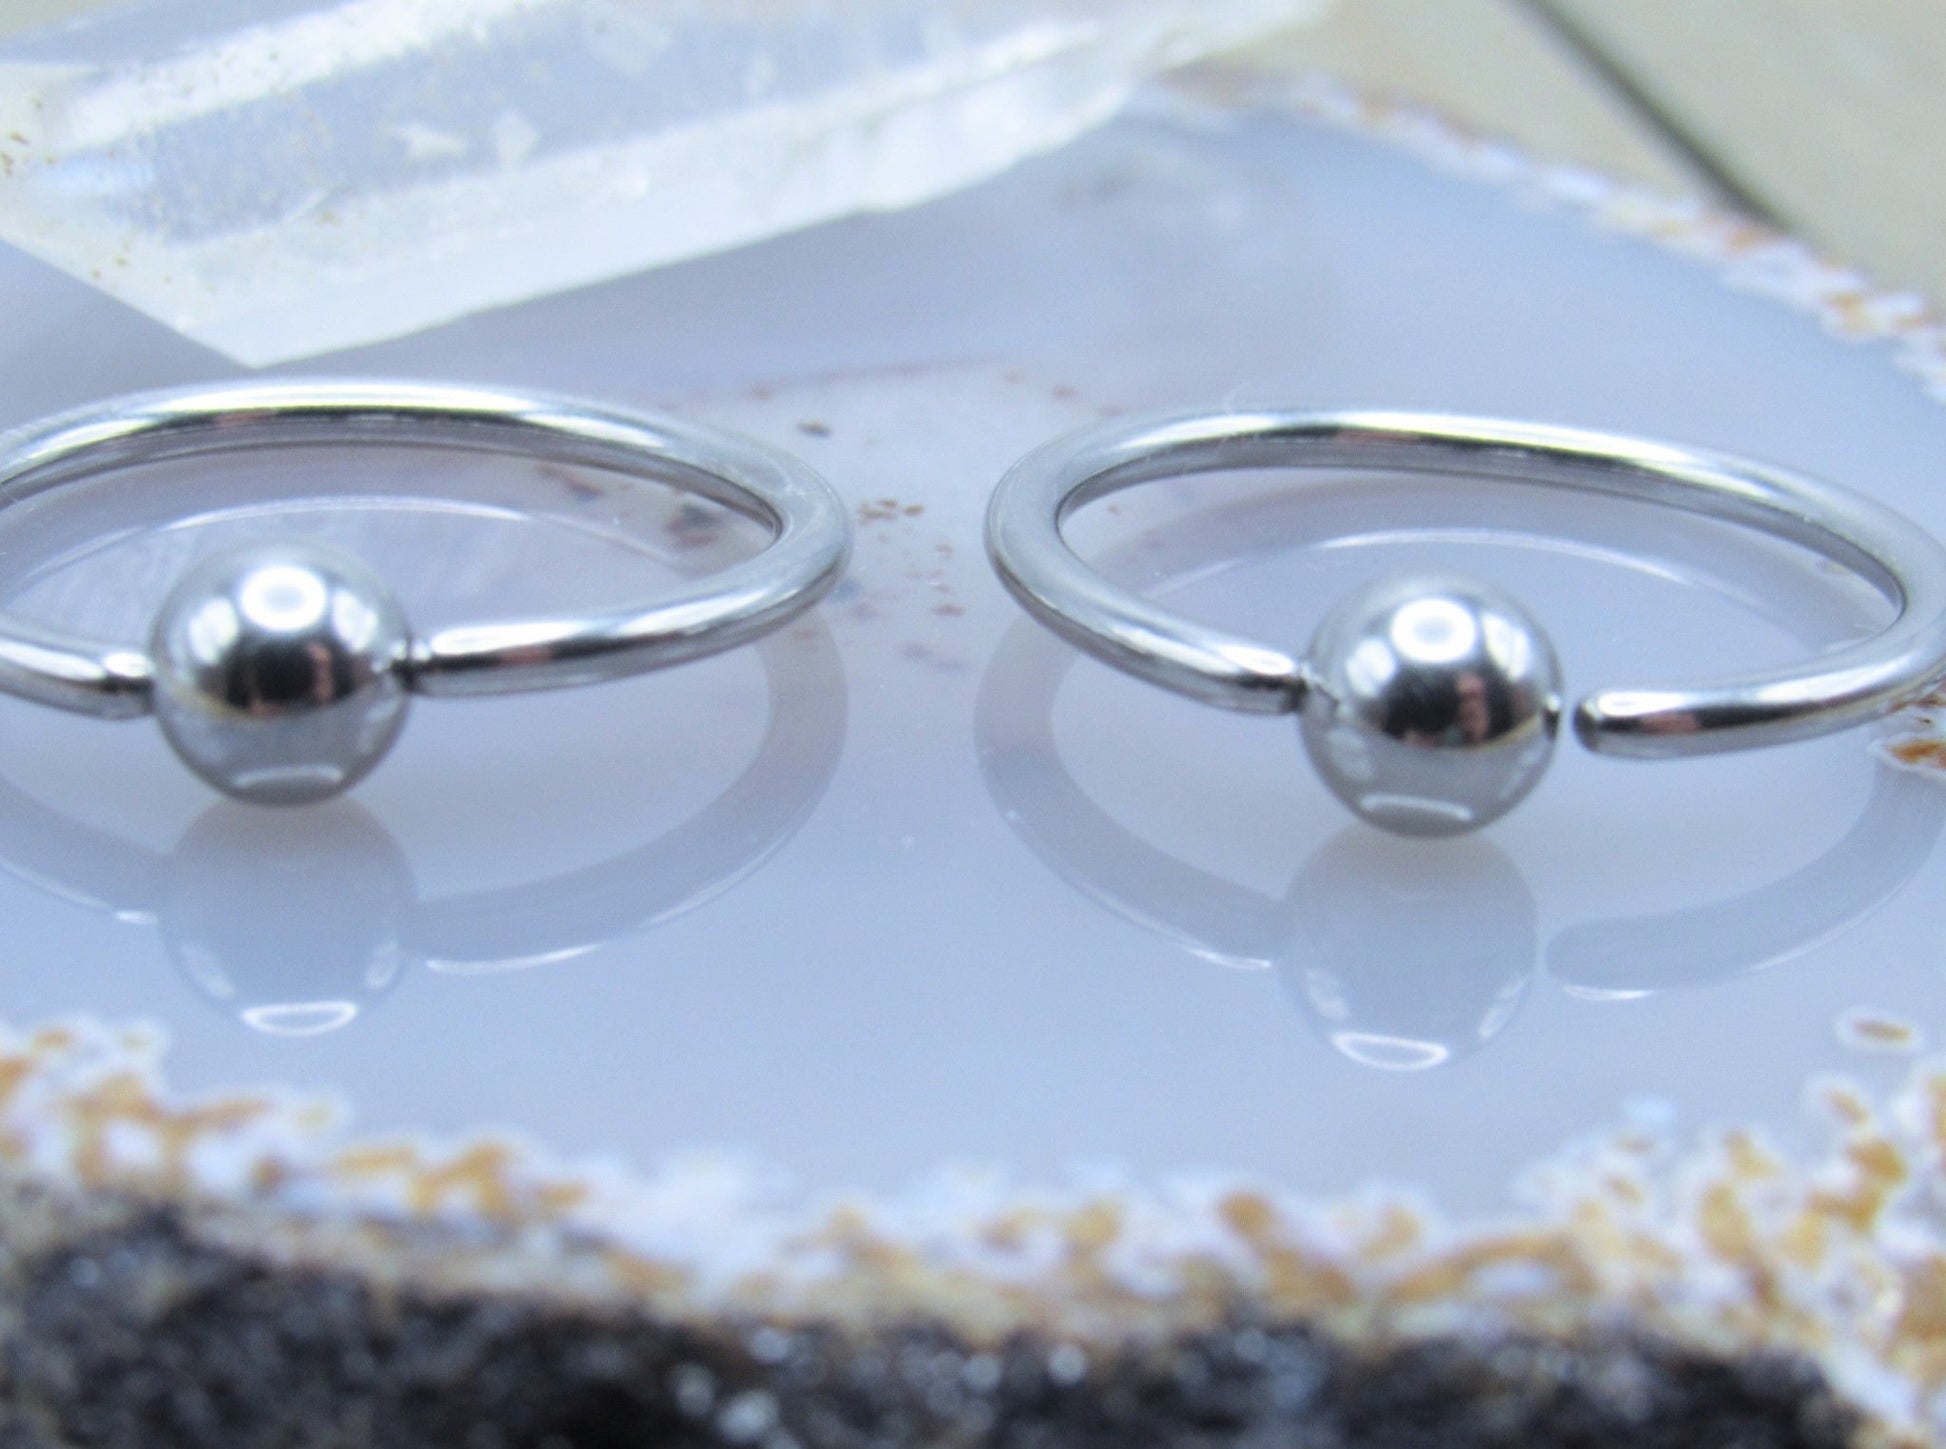 Stainless steel 14g 5/8" fixed bead ring ear nipple body piercing hoop set annealed easy bend - Siren Body Jewelry